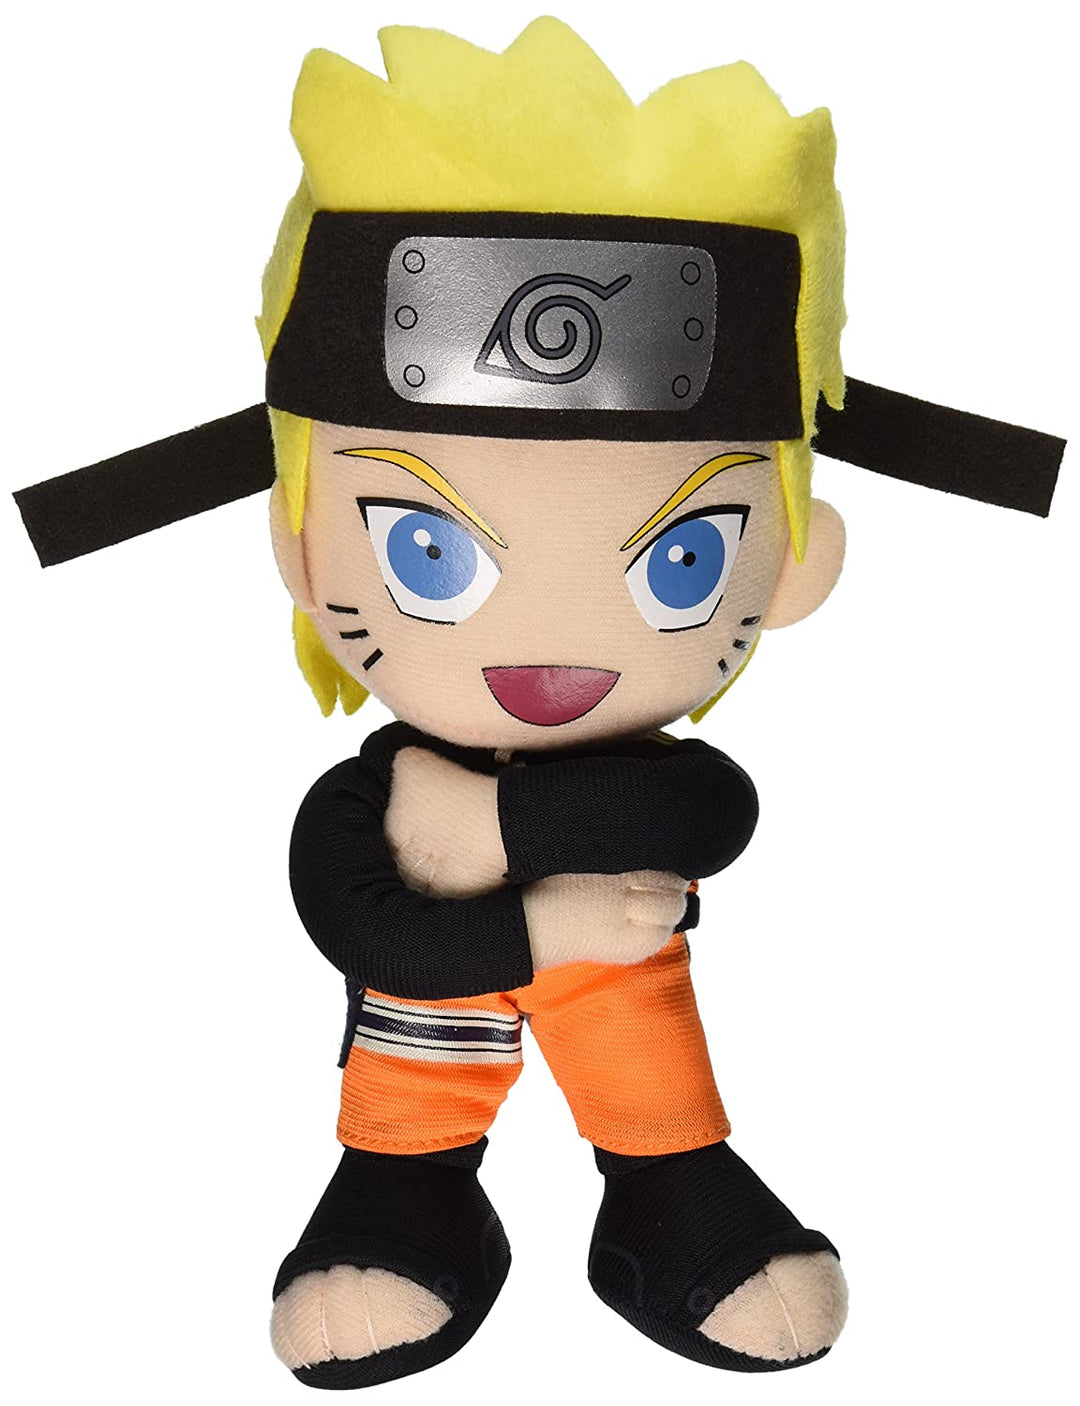 Naruto Shippuden Naruto 9" Plush Great Eastern Entertainment